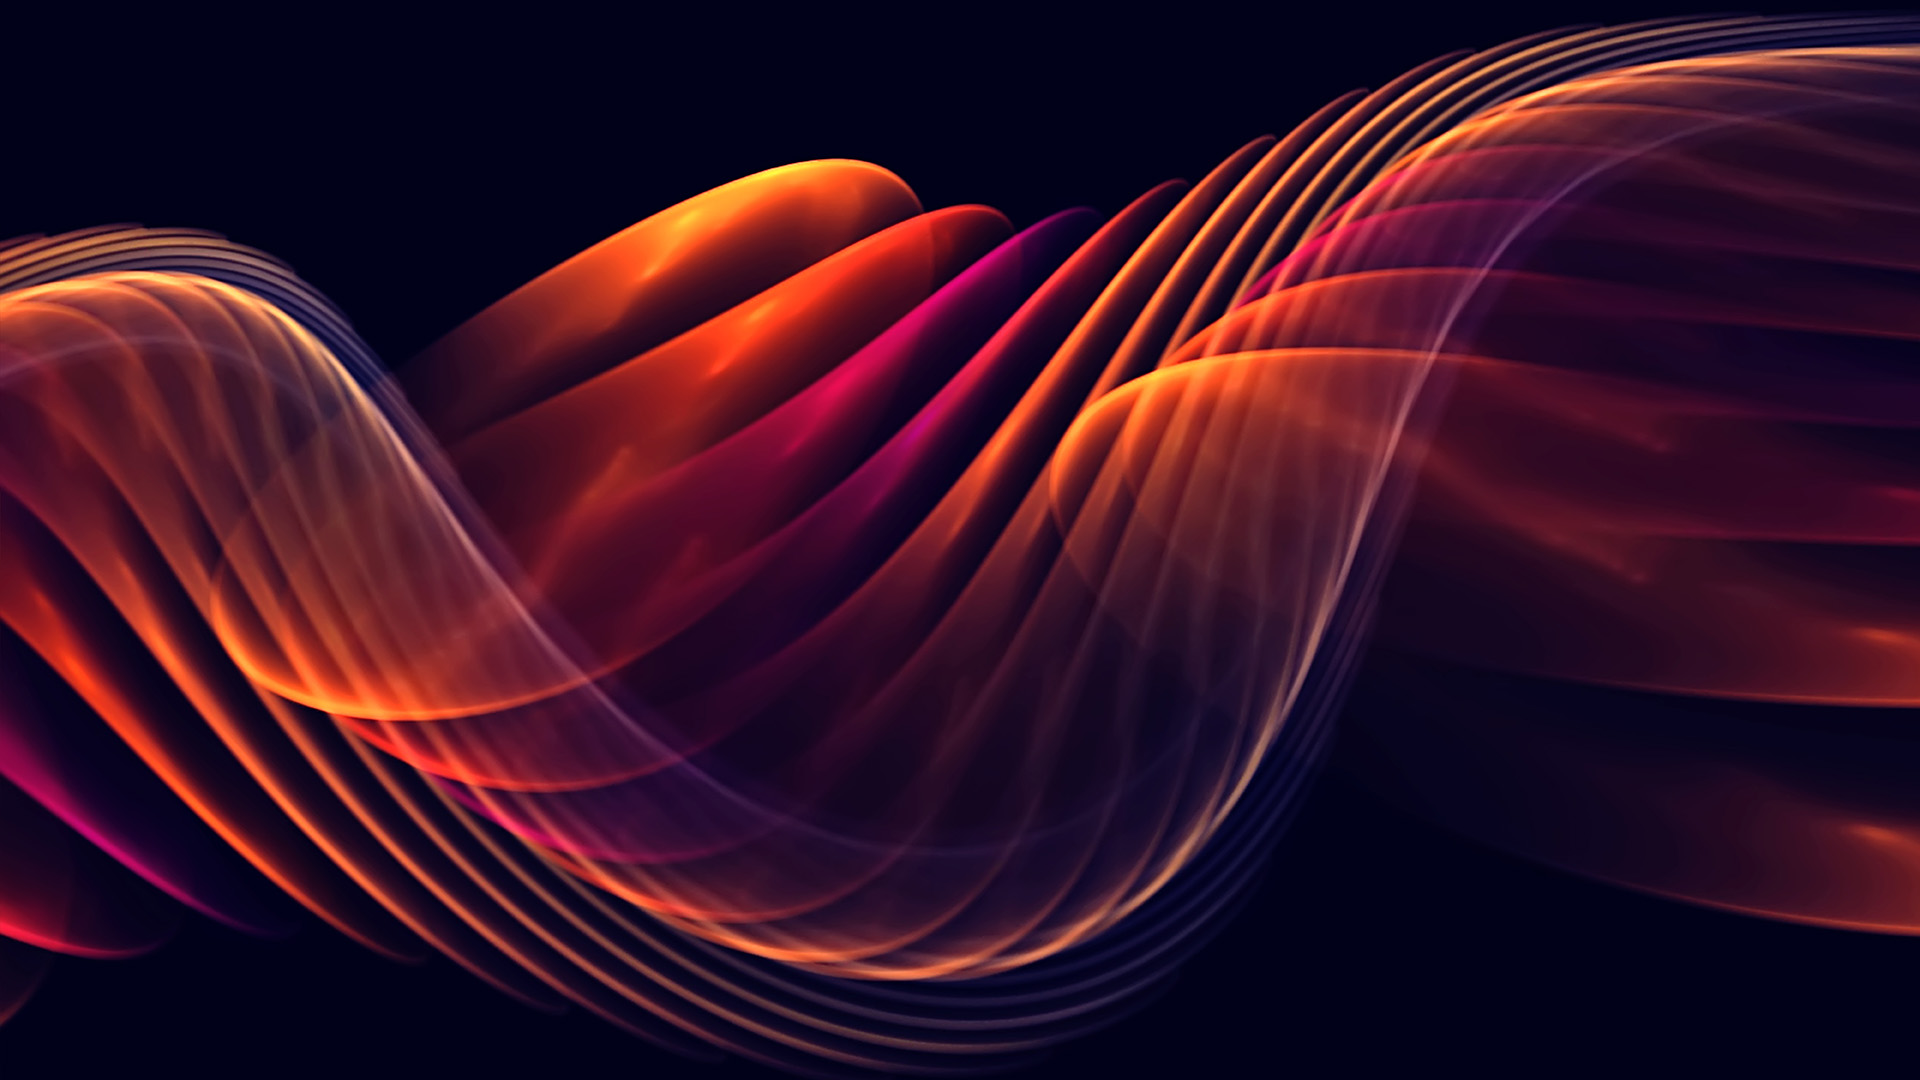 Curved digital wave with dark background